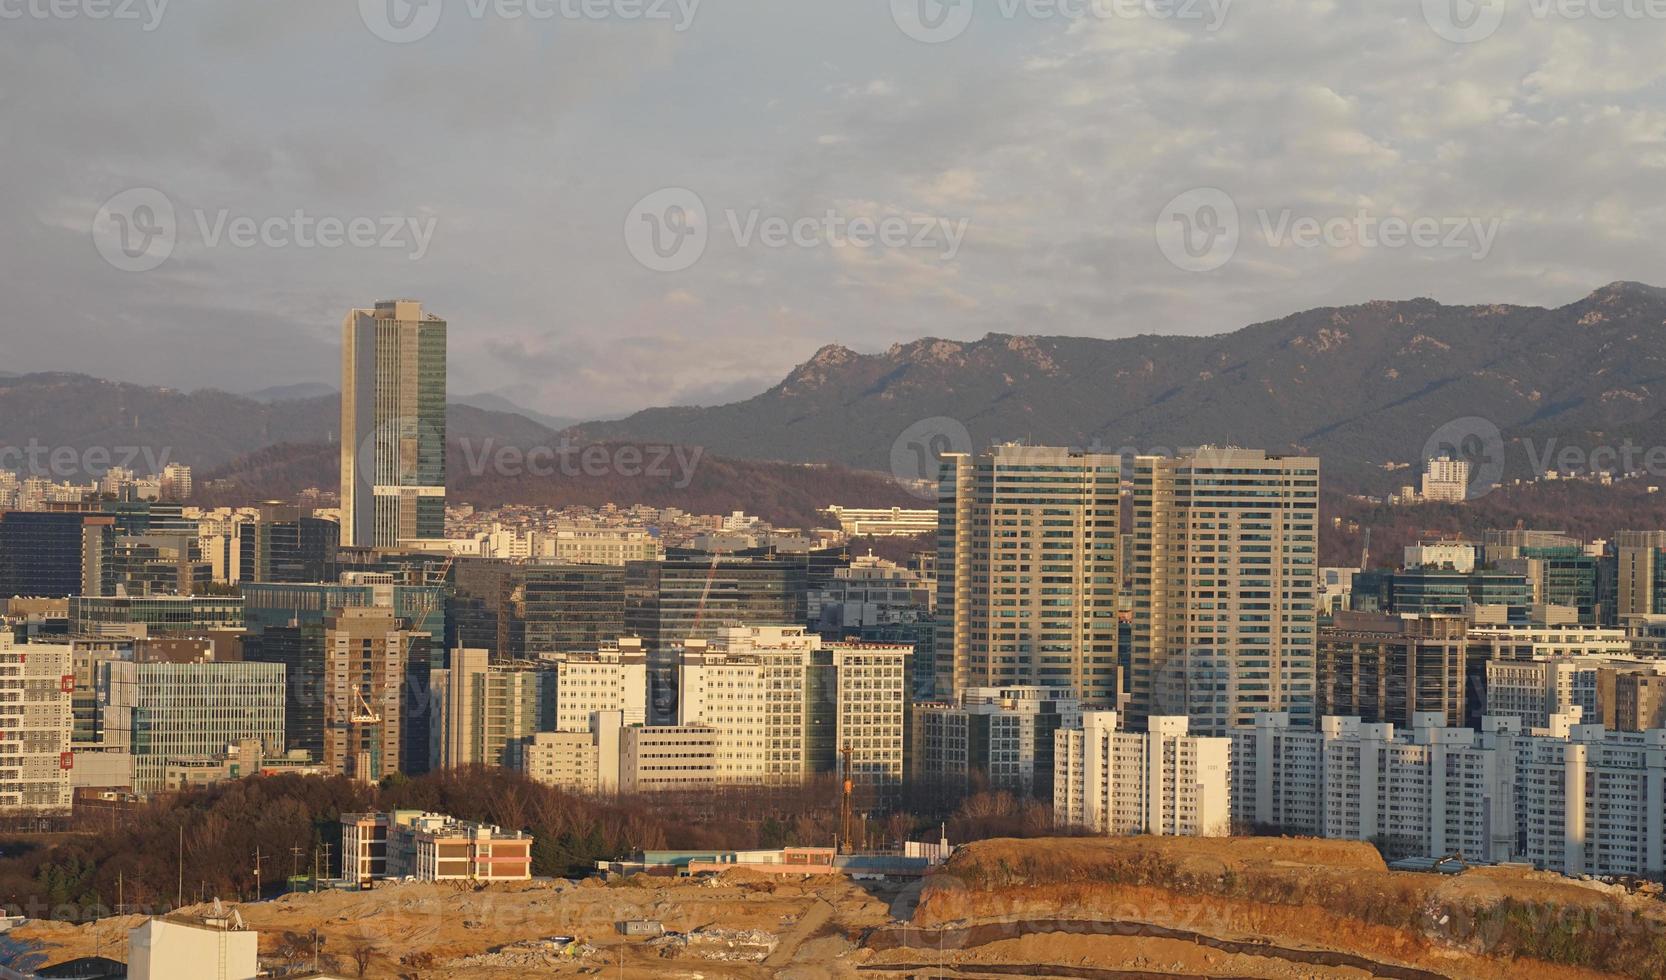 lägenhetslandskap i seoul, korea foto